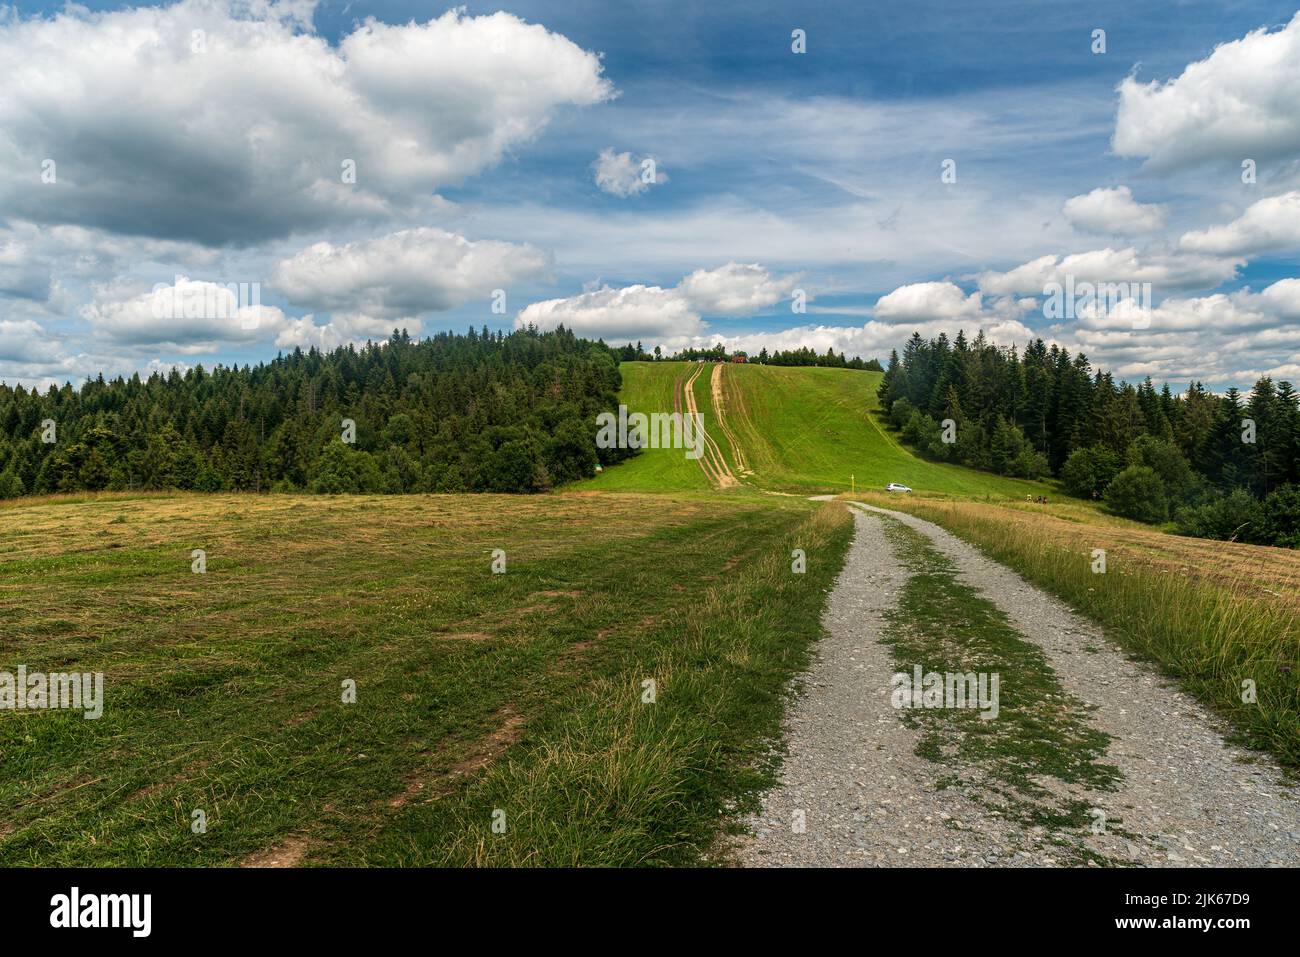 Kykula - highest hill of Jablunkovske medzihorie mountains on slovakian - polish borders during beautiful summer day Stock Photo